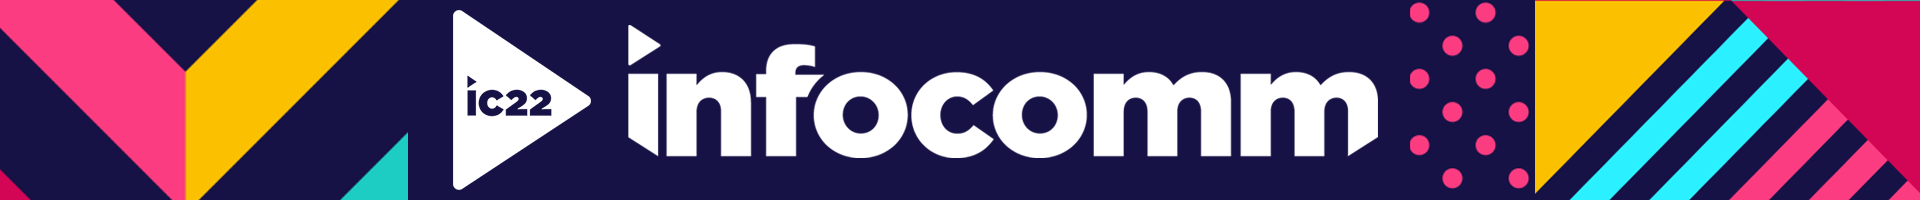 InfoComm 2022 - Manufacturer's Training Event Banner